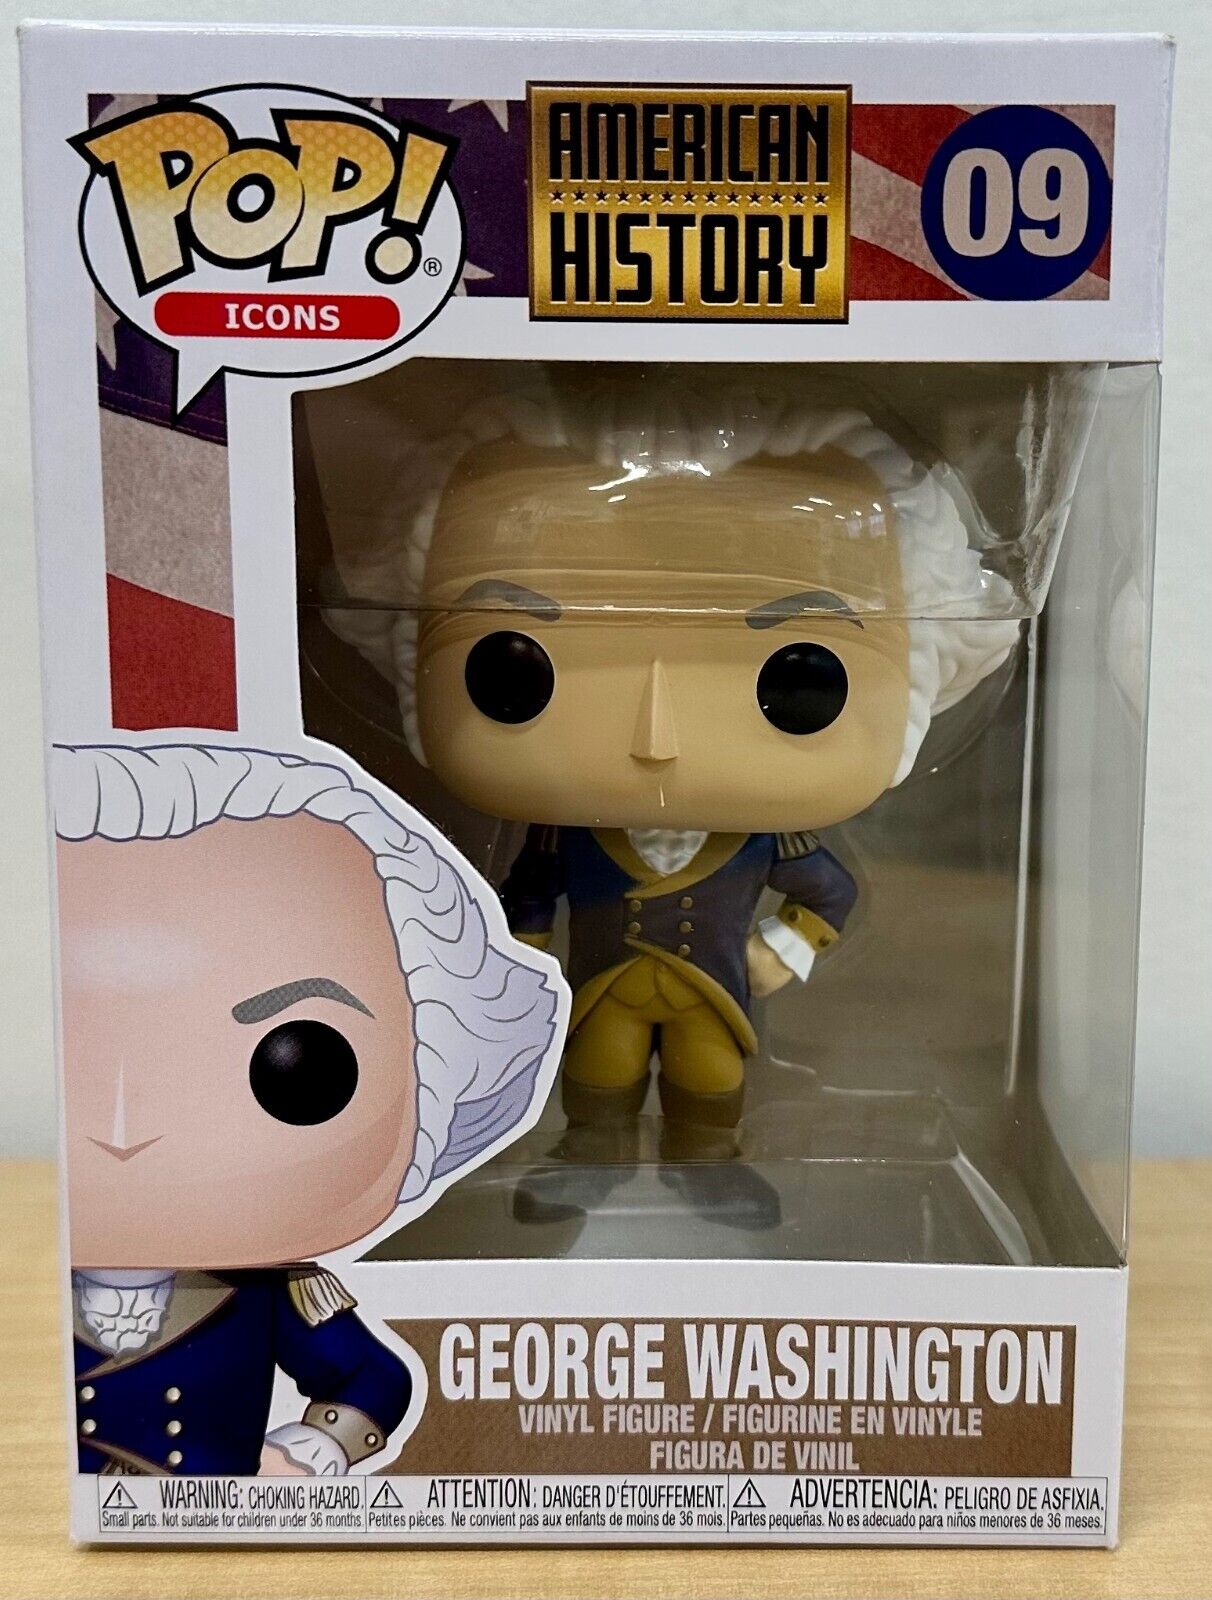 President GEORGE WASHINGTON American History Icons Series Funko Pop #09